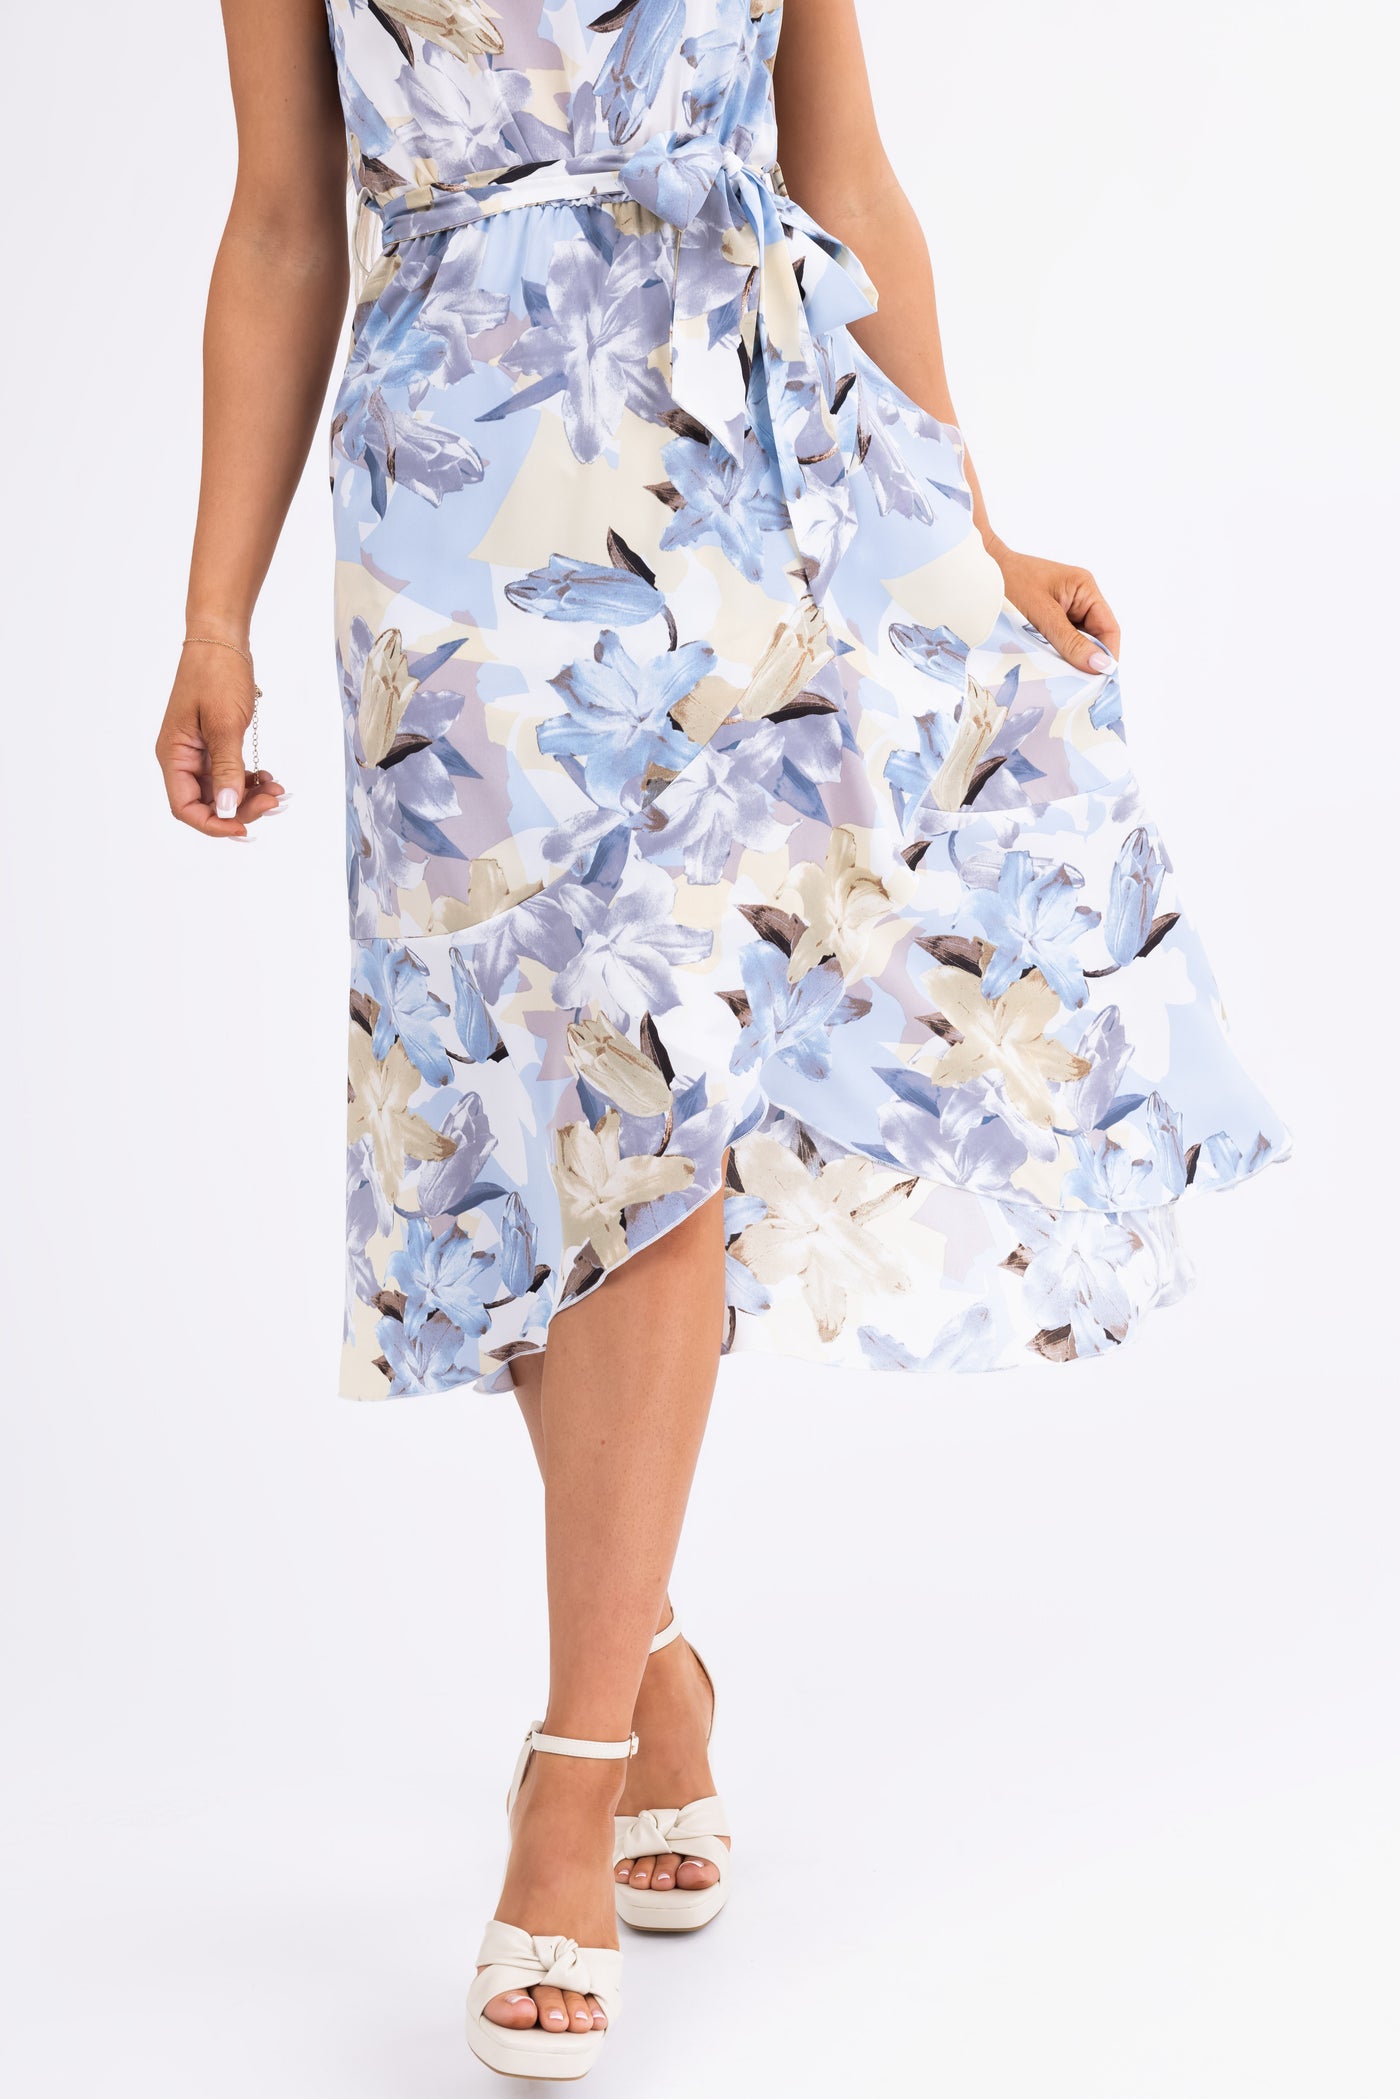 Baby Blue Floral Print Halter Midi Dress